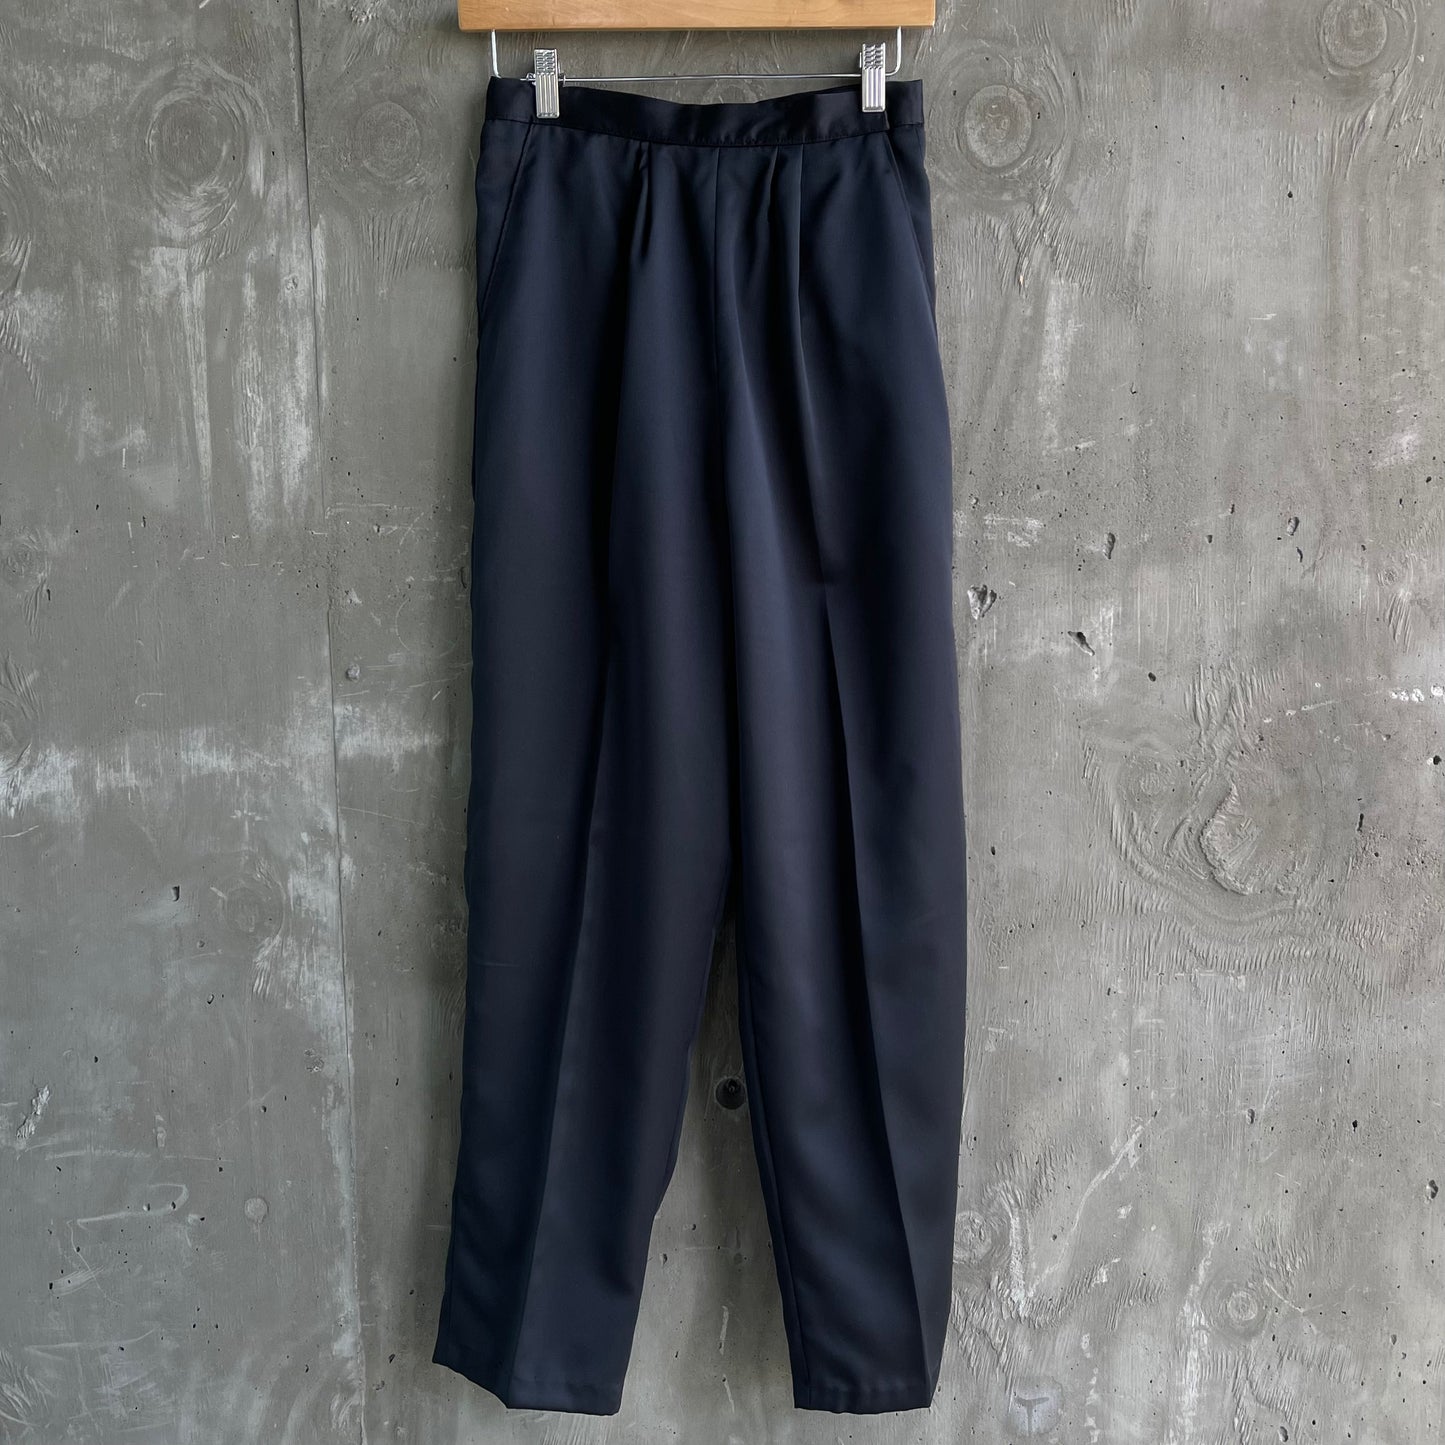 Vintage 40’s 50’s Antique Silk Pants in Black